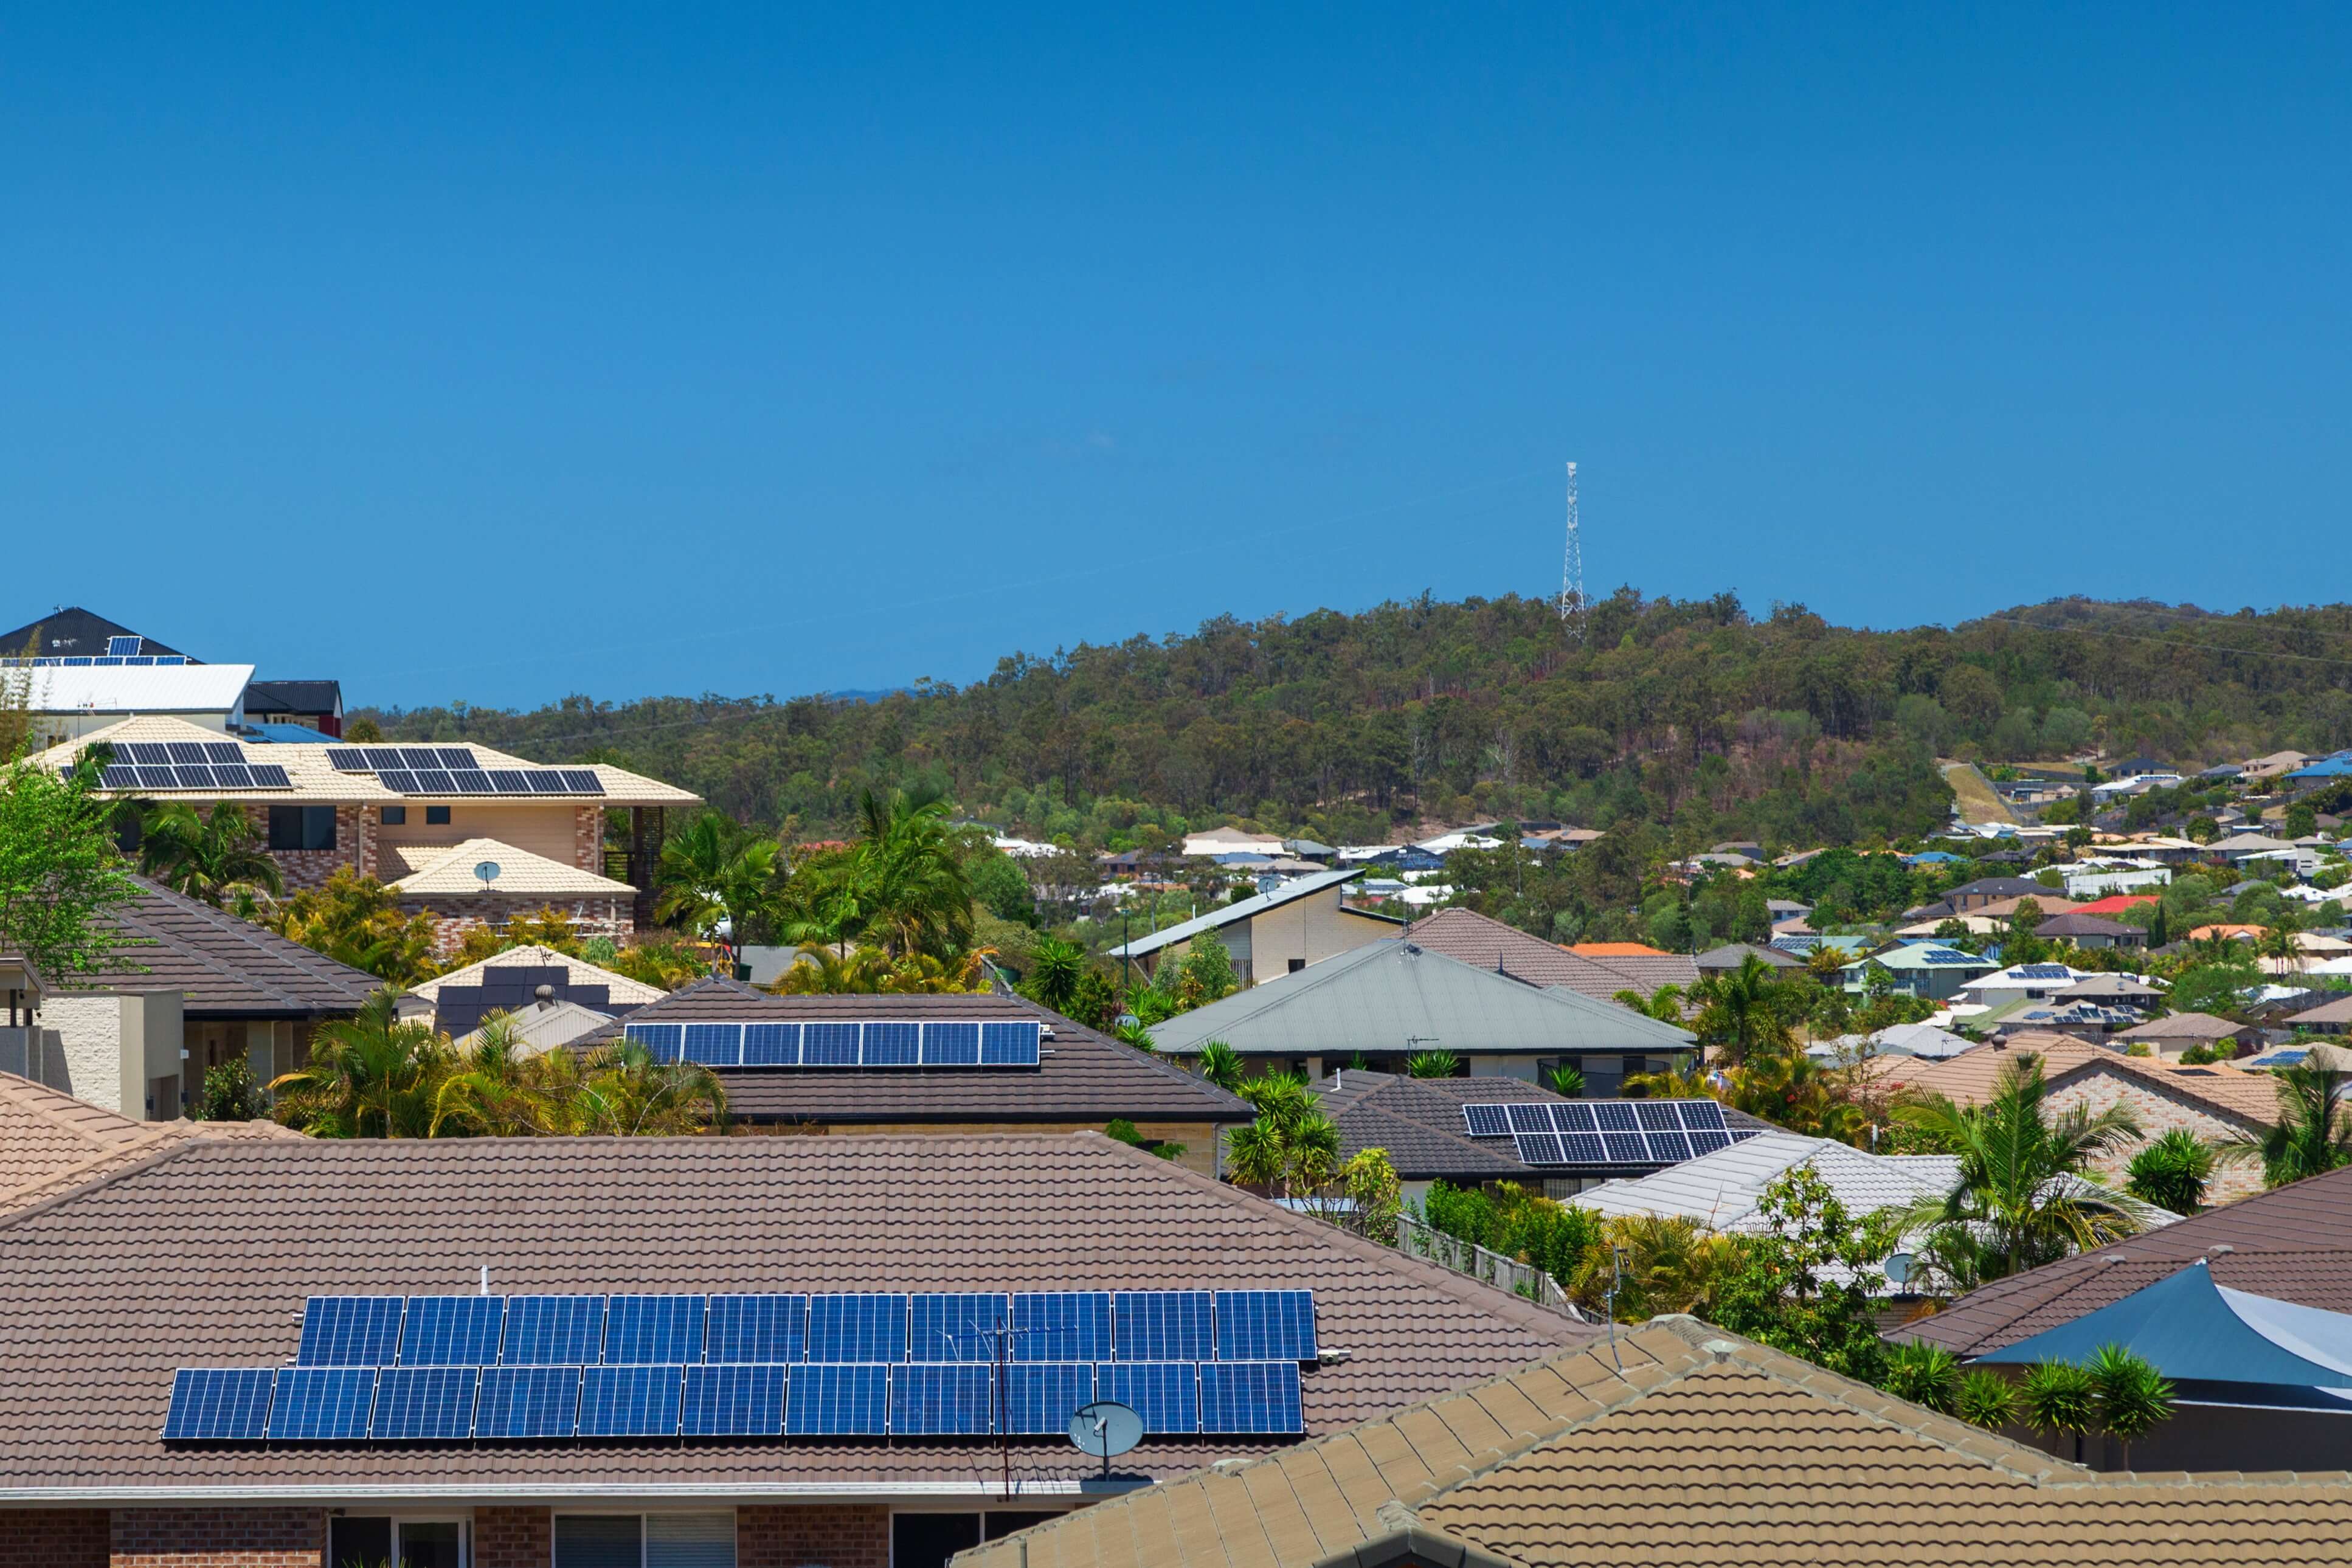 AUSTRALIA'S TOP TEN SOLAR-POWERED SUBURBS